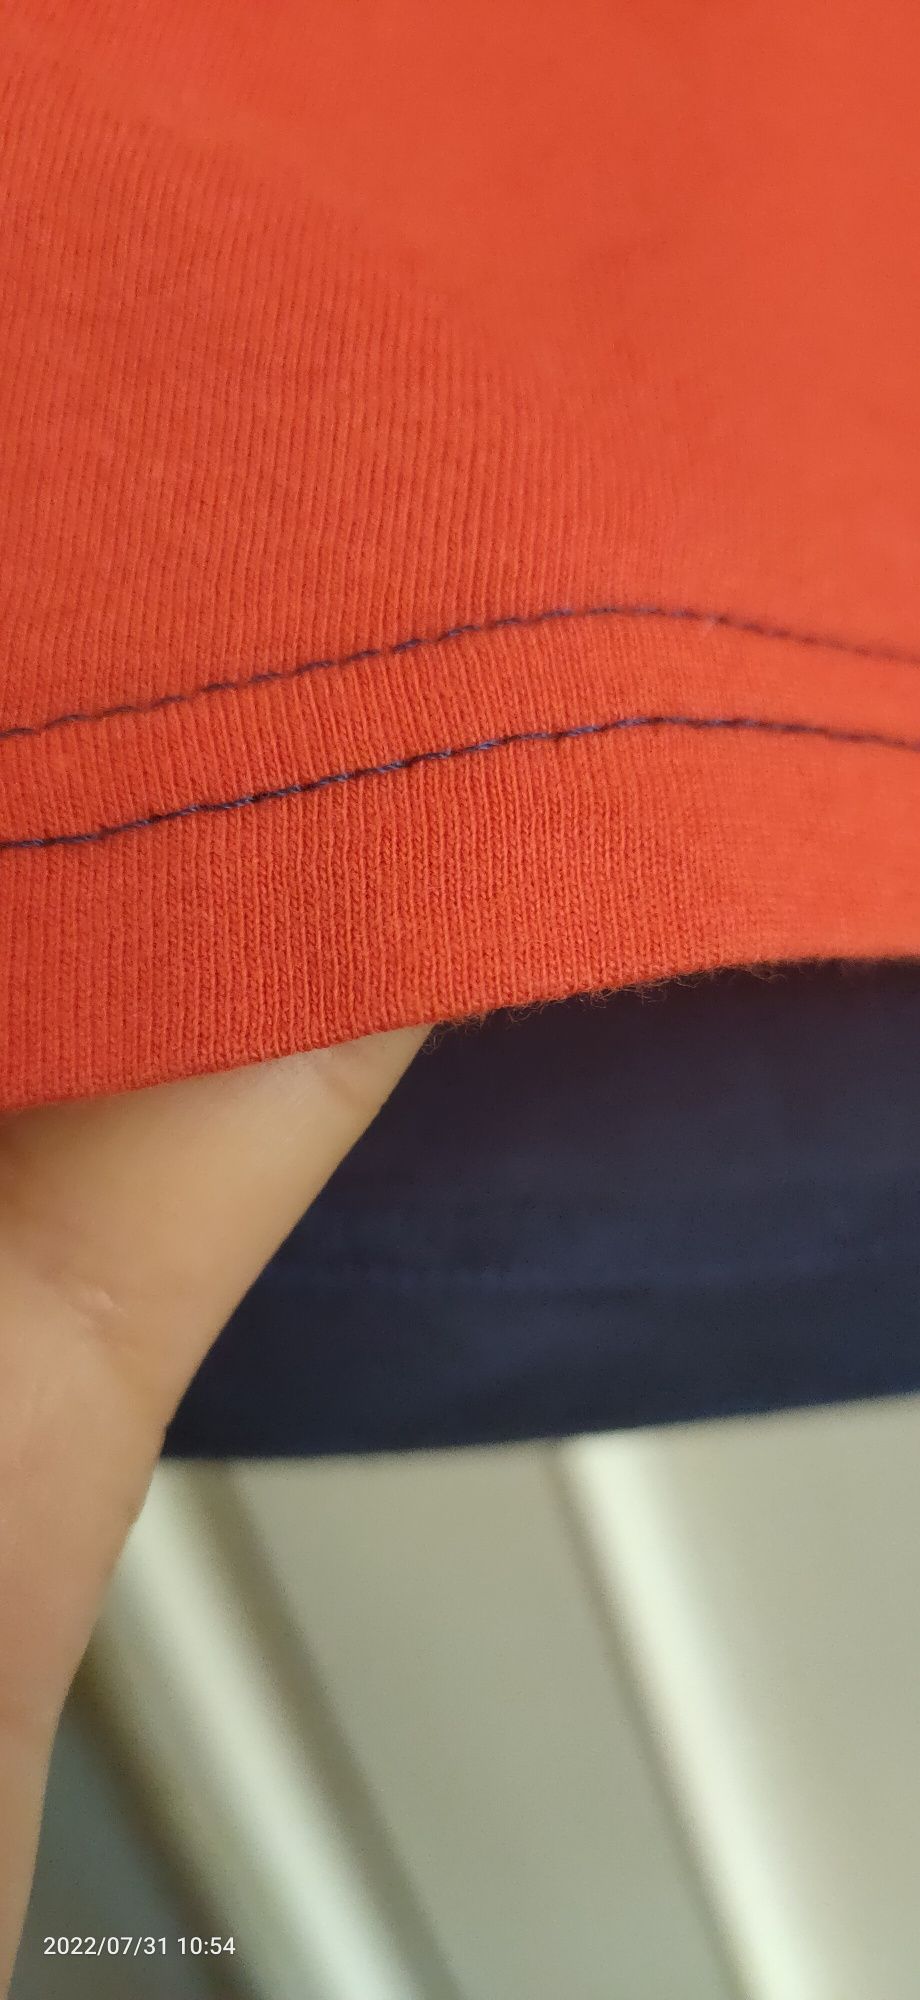 Fajny t-shirt ceglasto(pomarańczowo)-granatowy M/L(obwód 105cm)